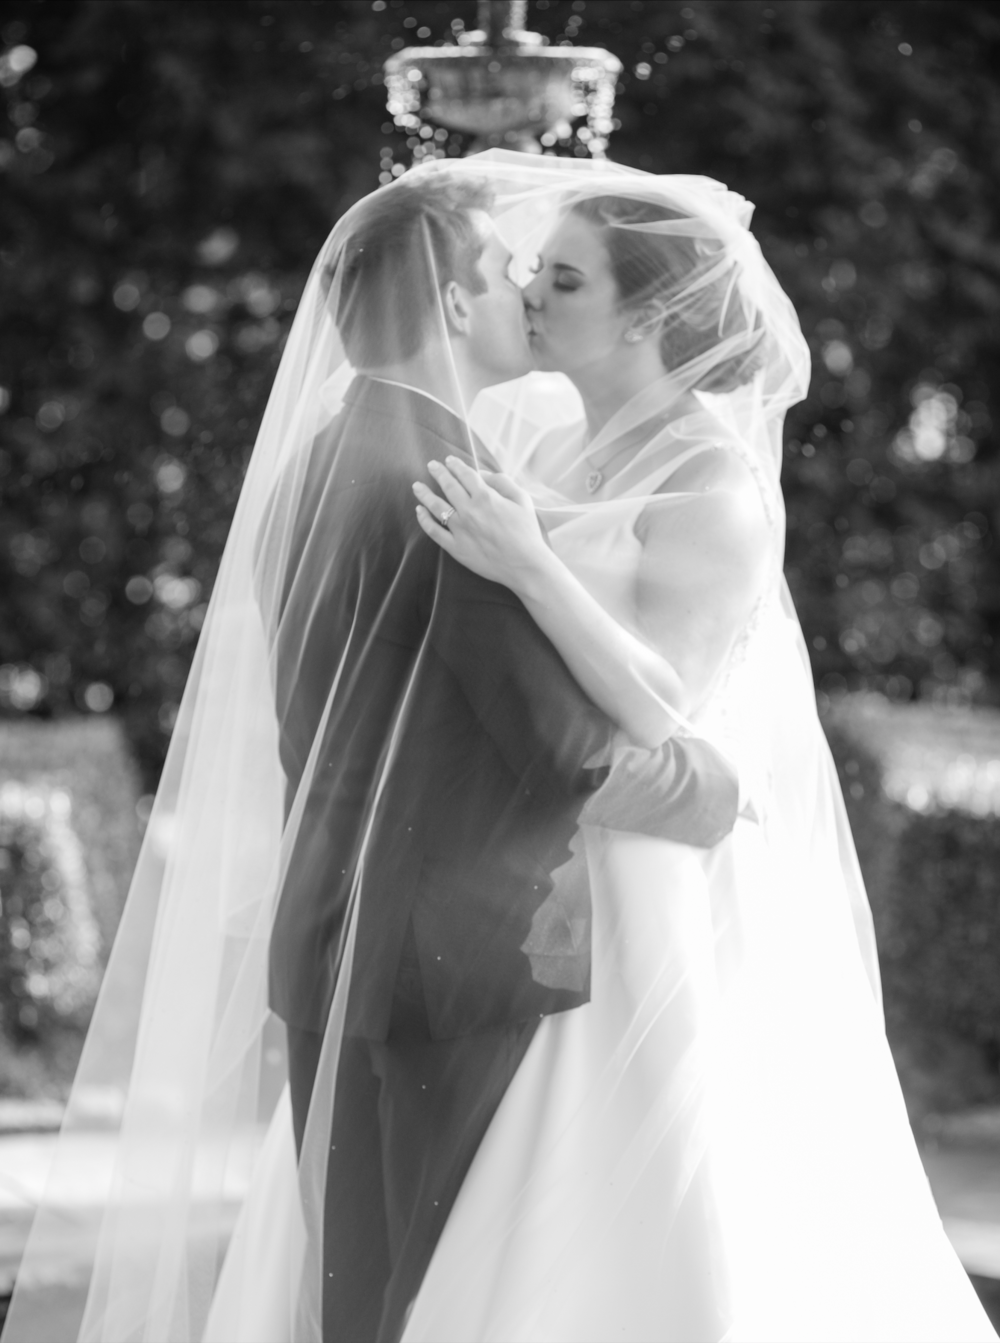 Romantic Black and White Wedding Photographs - Matt Erickson Photography